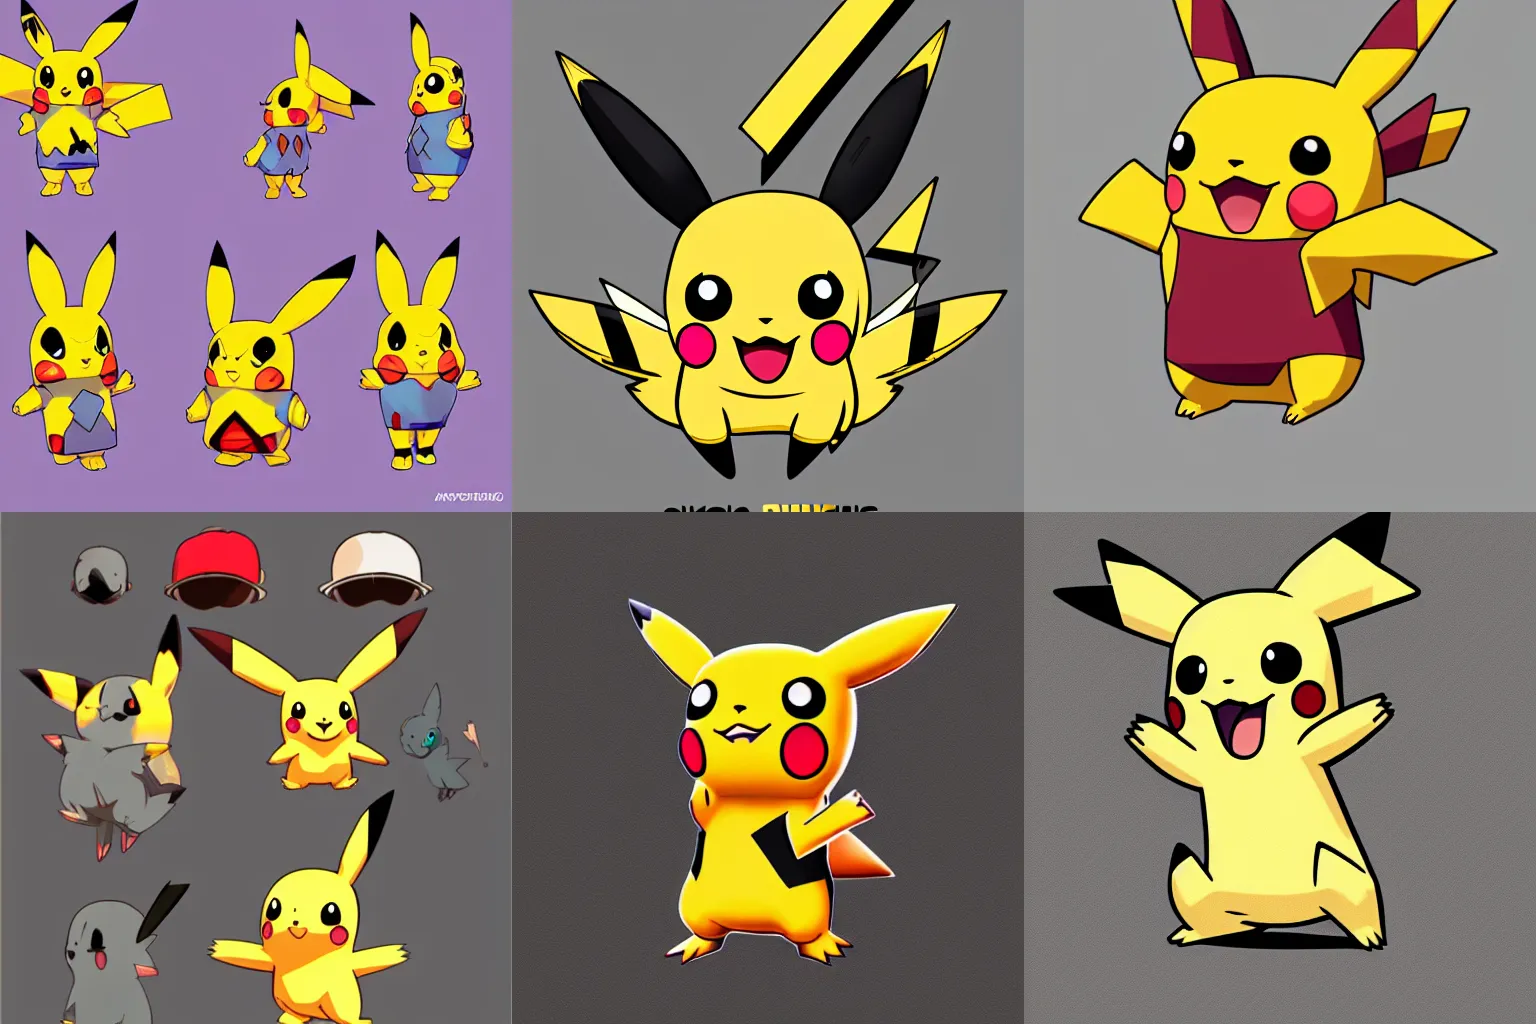 Prompt: stylized cute pikachu character design, dynamic pose pokemon, stunning illustration trending on artstation